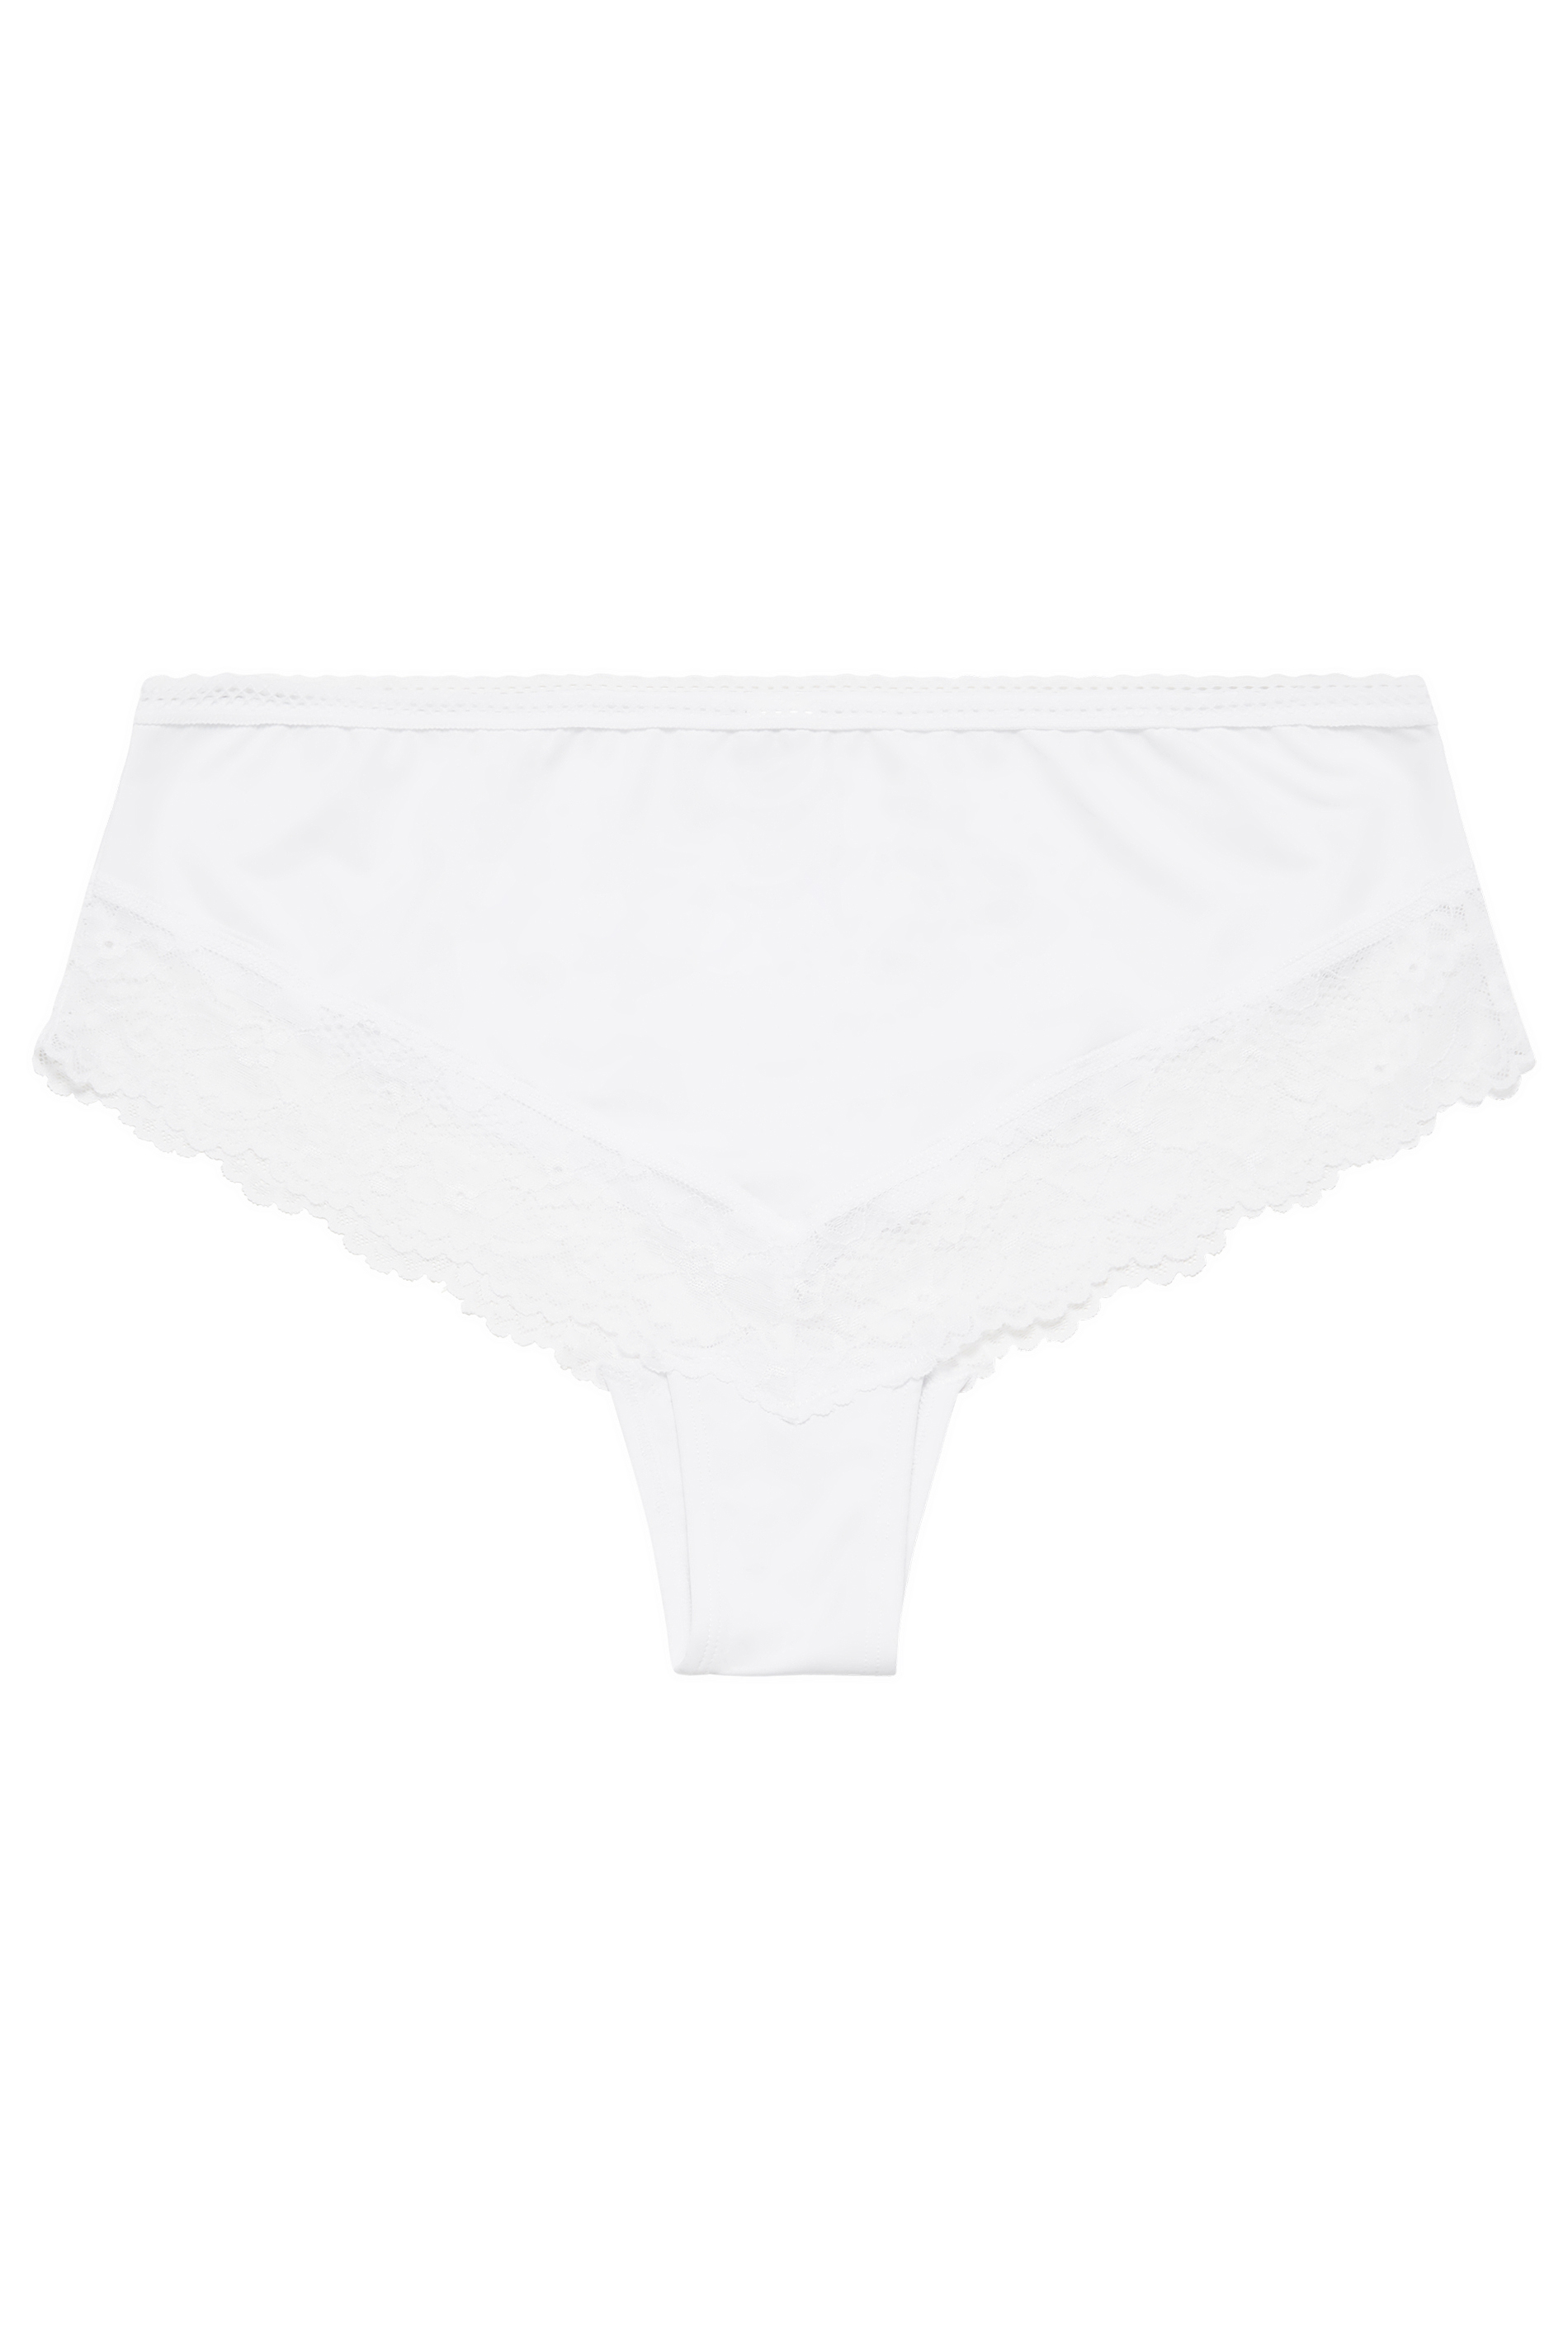 Plus Size White Lace Trim High Waisted Brazilian Shorts | Yours Clothing 2